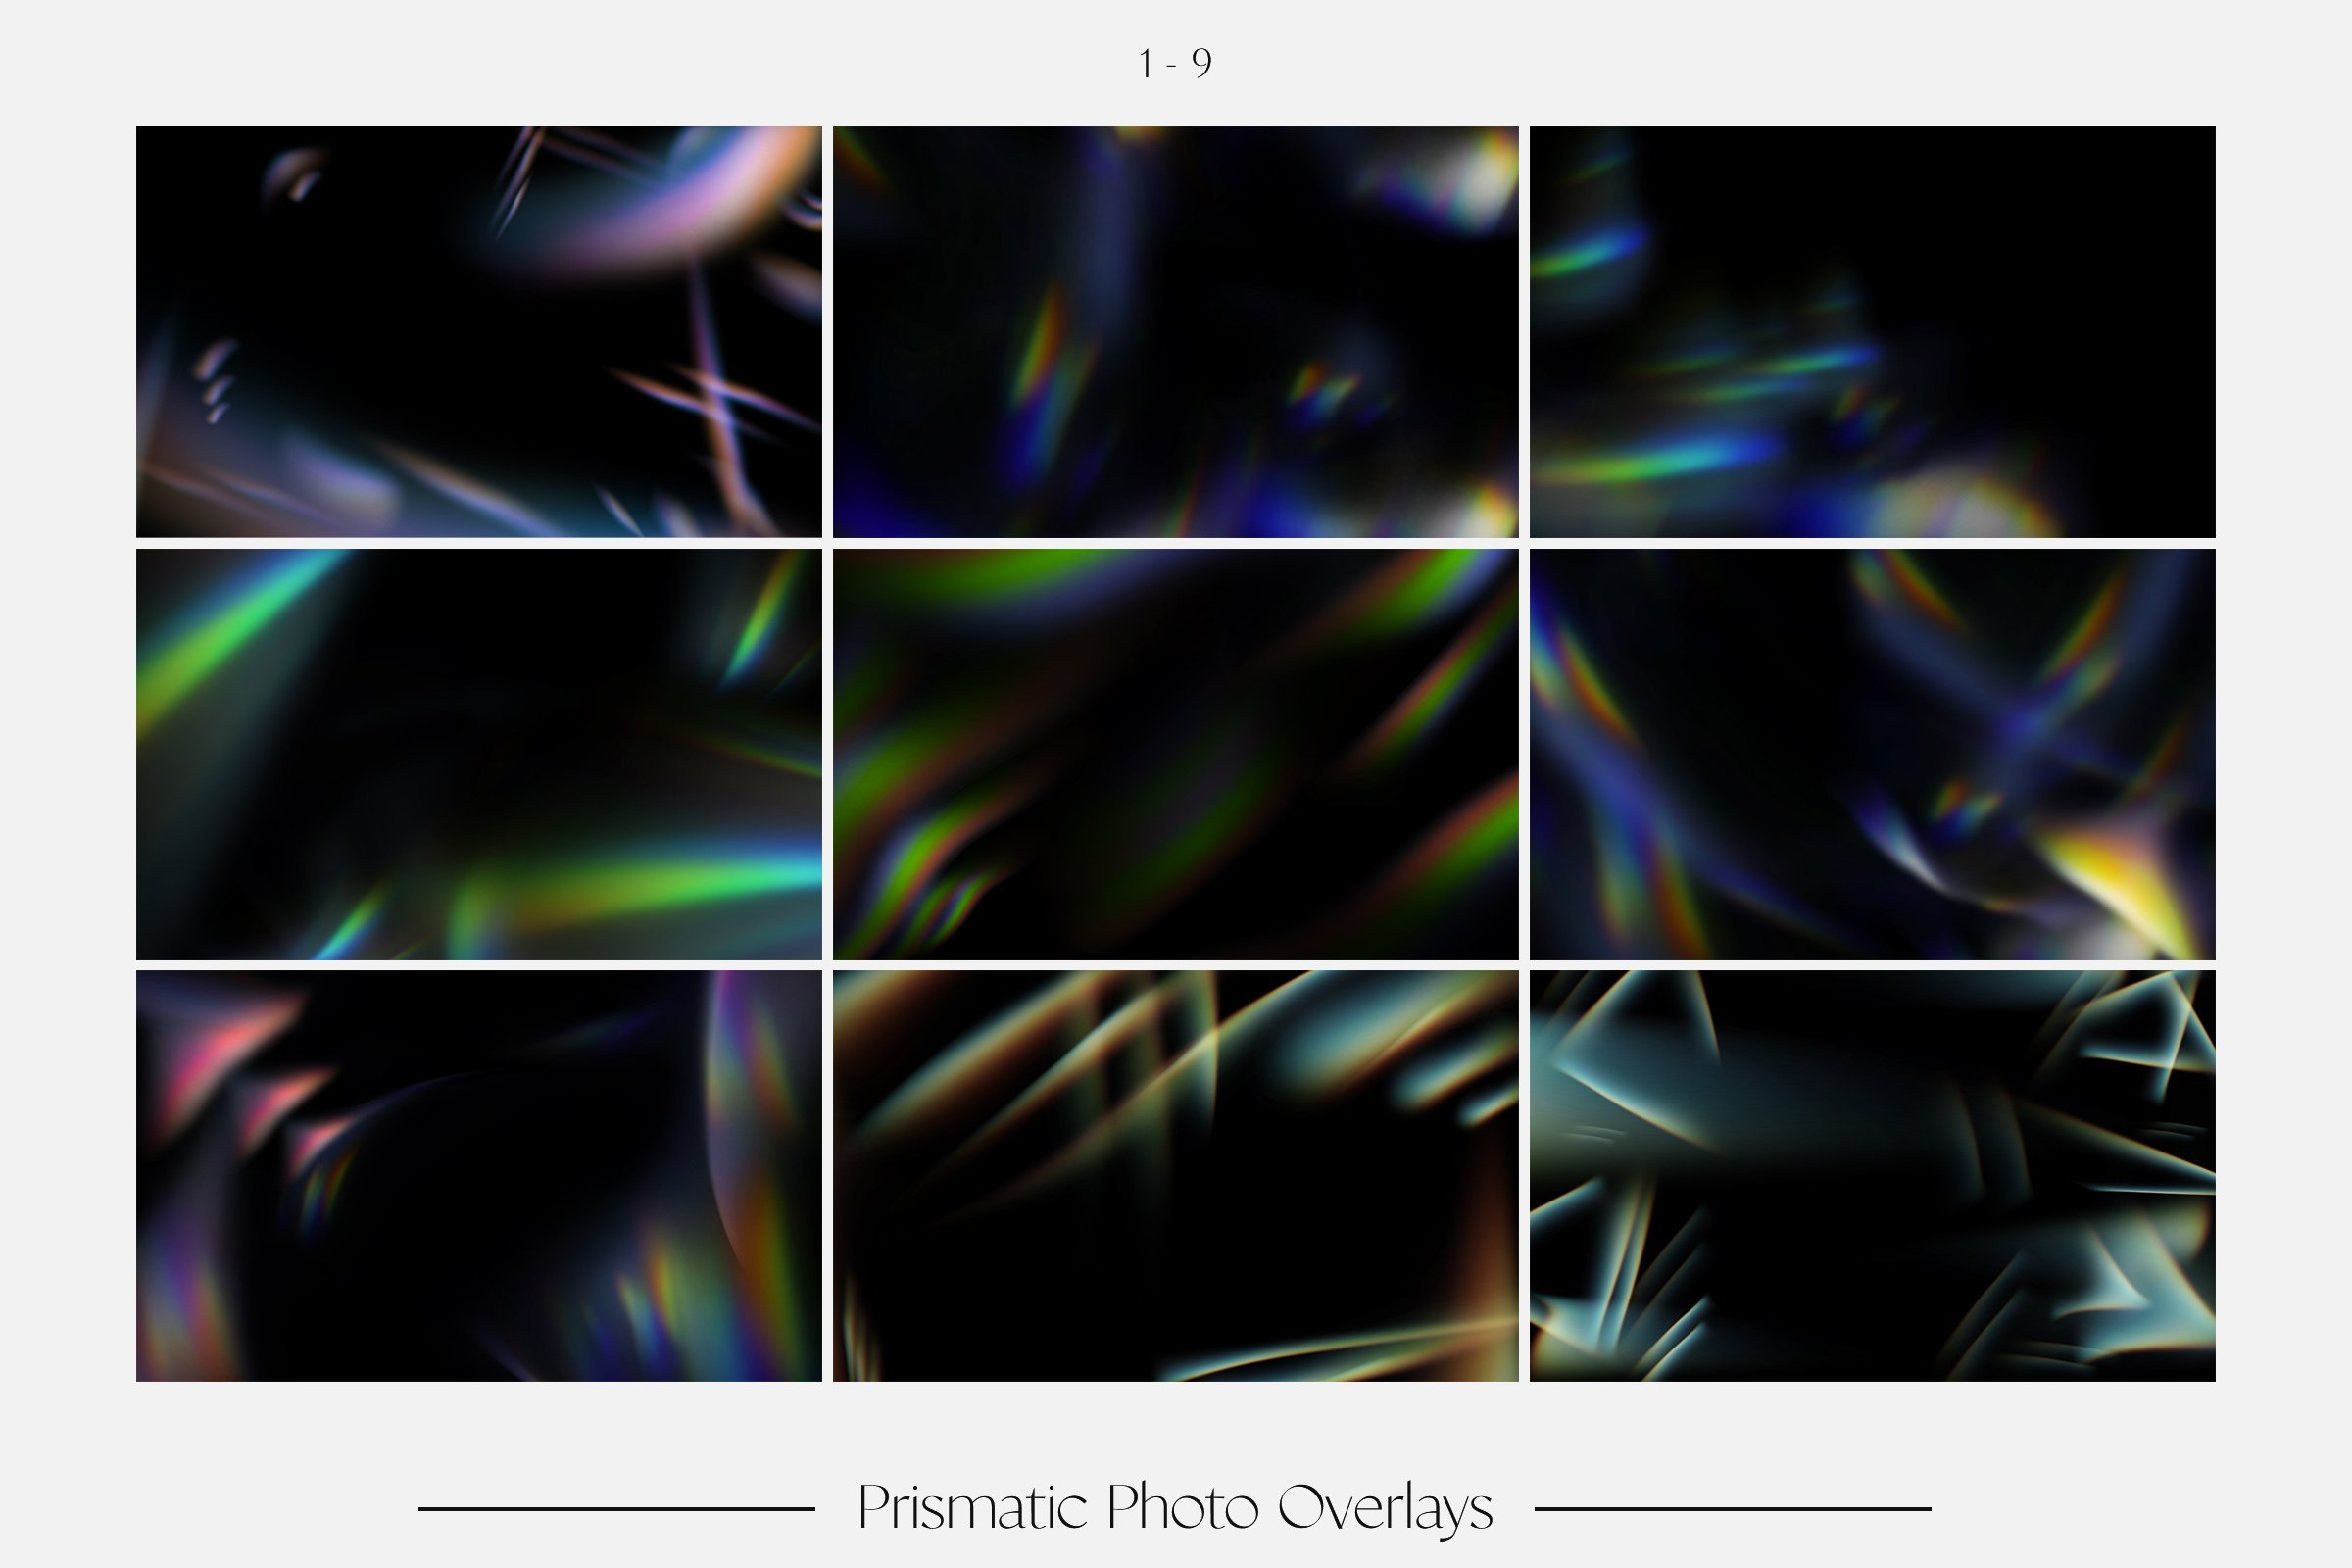 Prismatic Photo Overlays 摄影后期棱镜效果照片叠加 , 第10张